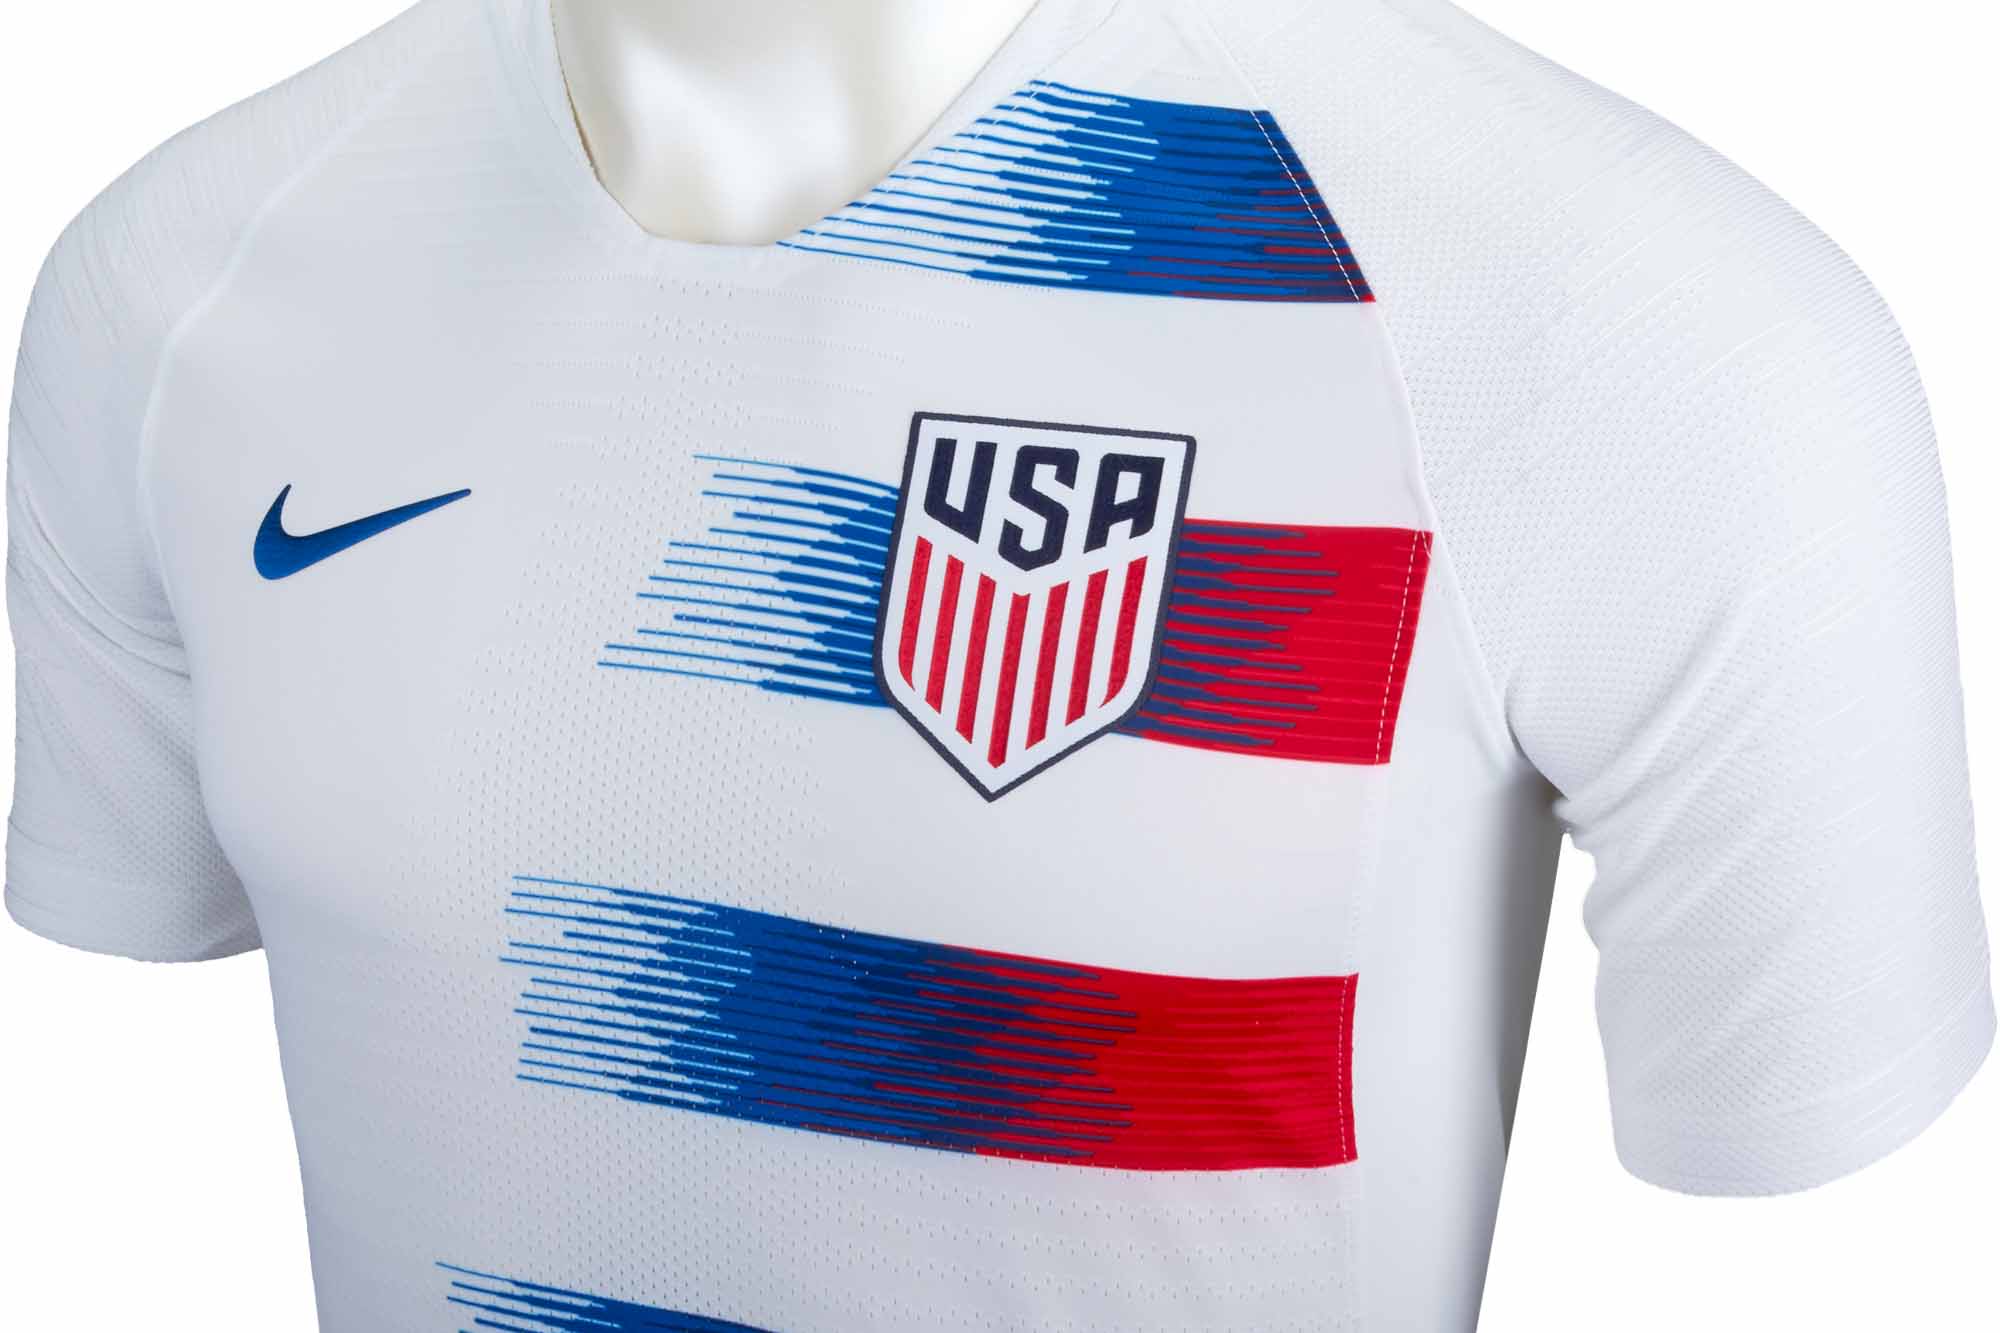 Nike USA Home Match Jersey 2018-19 - SoccerPro.com